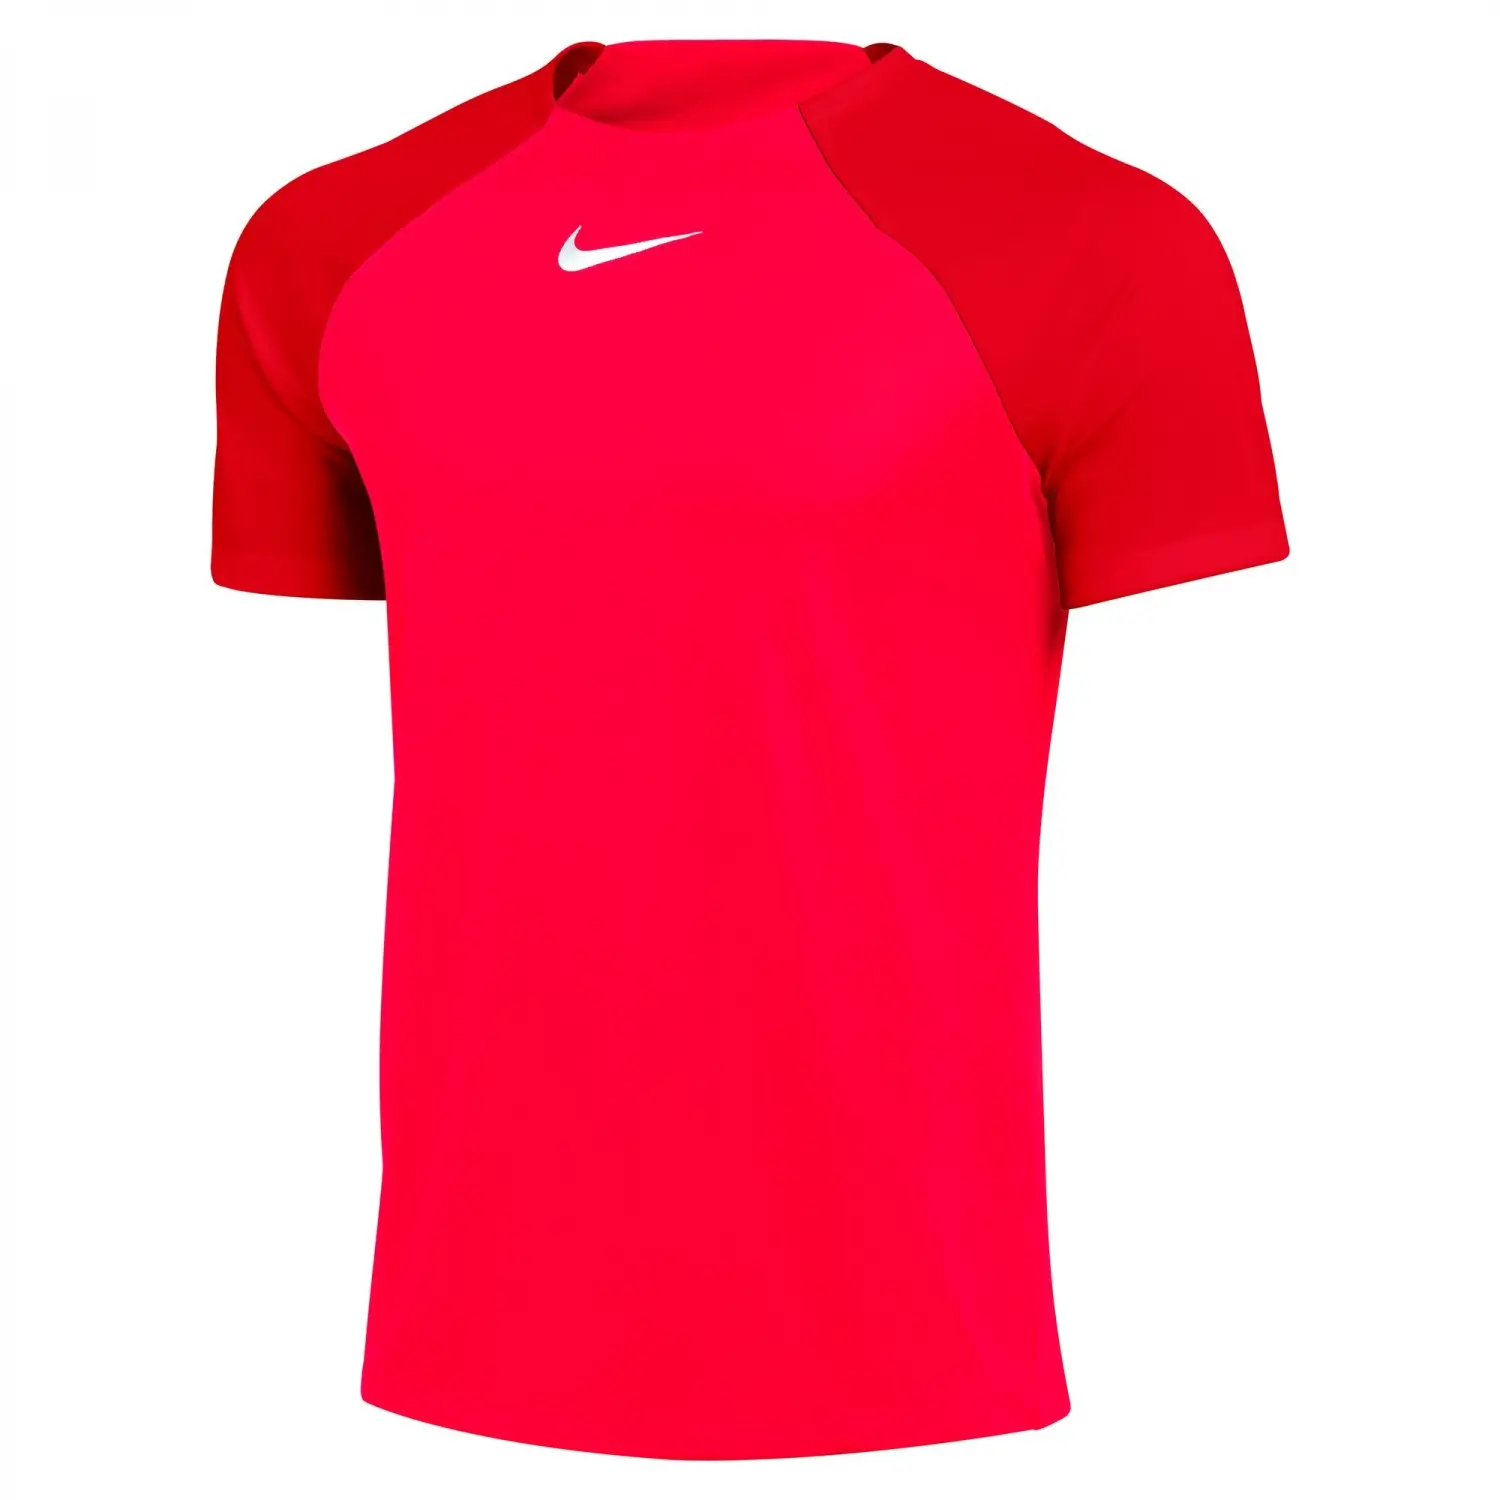 Nike Dri-FIT Academy Pro Kırmızı Erkek Tişört DH9225-635